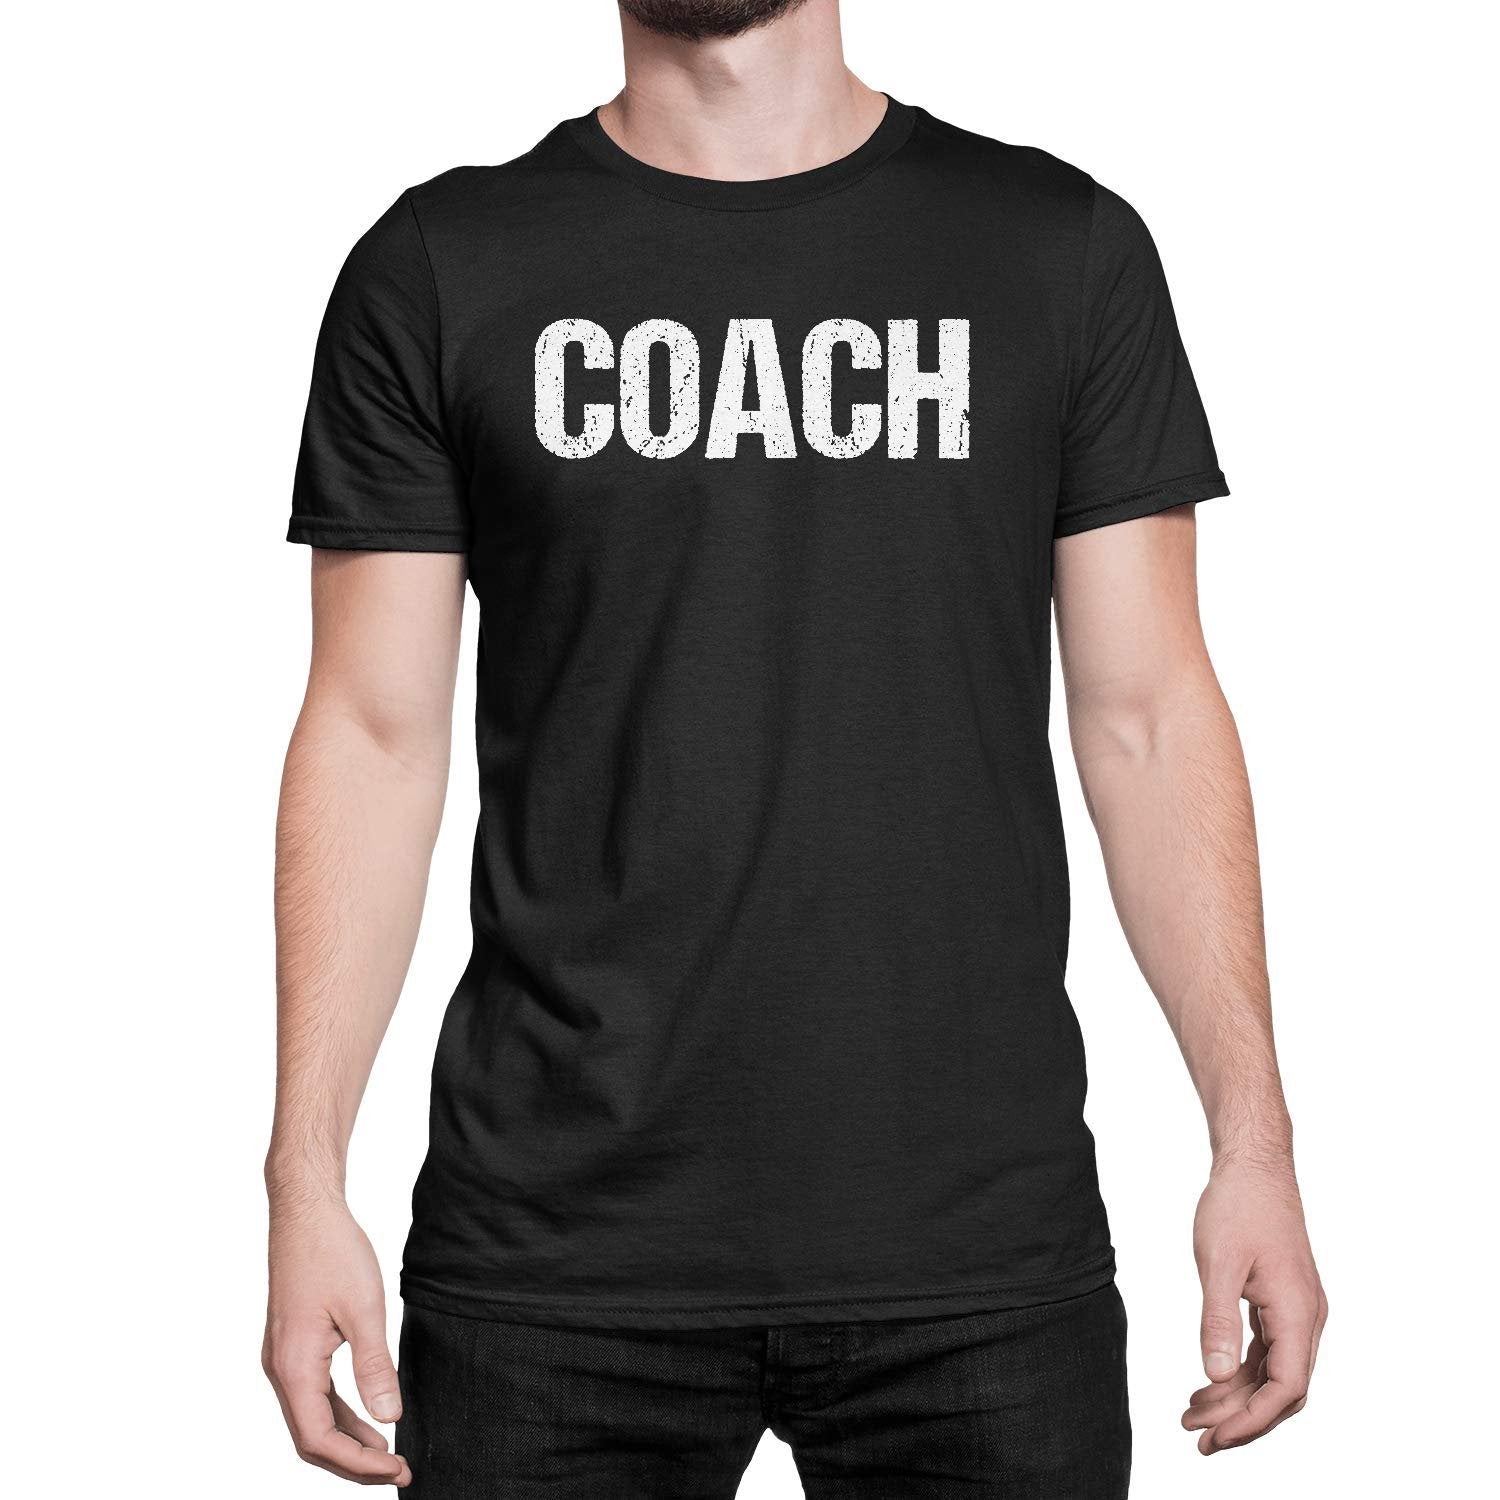 Coach T-Shirt Sports Coaching Tee Shirt (Black & White, Distressed)